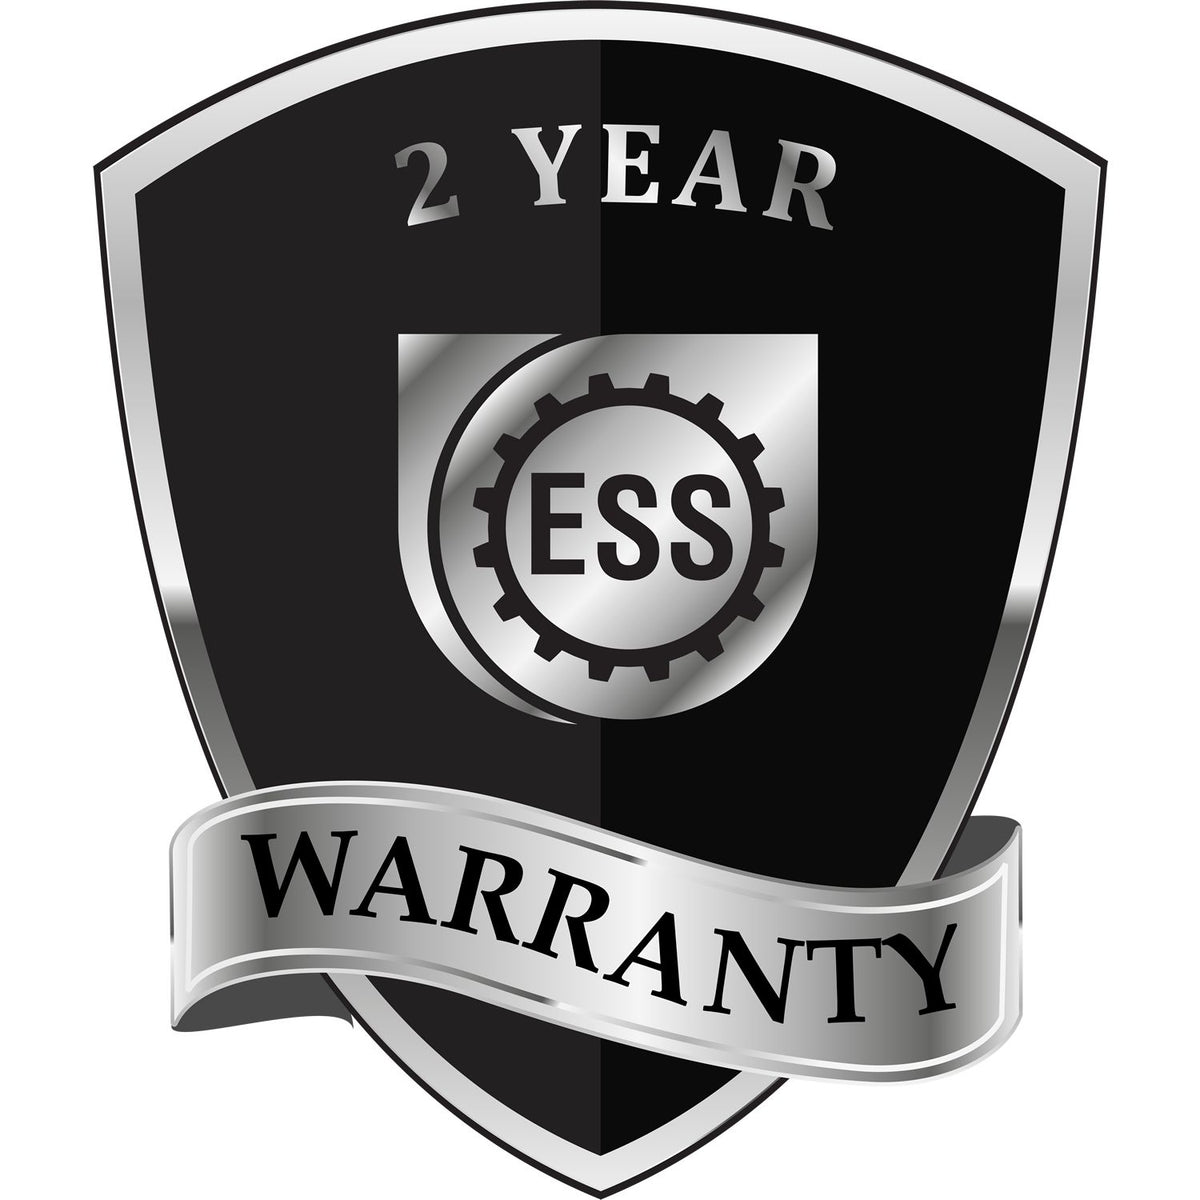 A black and silver badge or emblem showing warranty information for the Florida Geologist Desk Seal